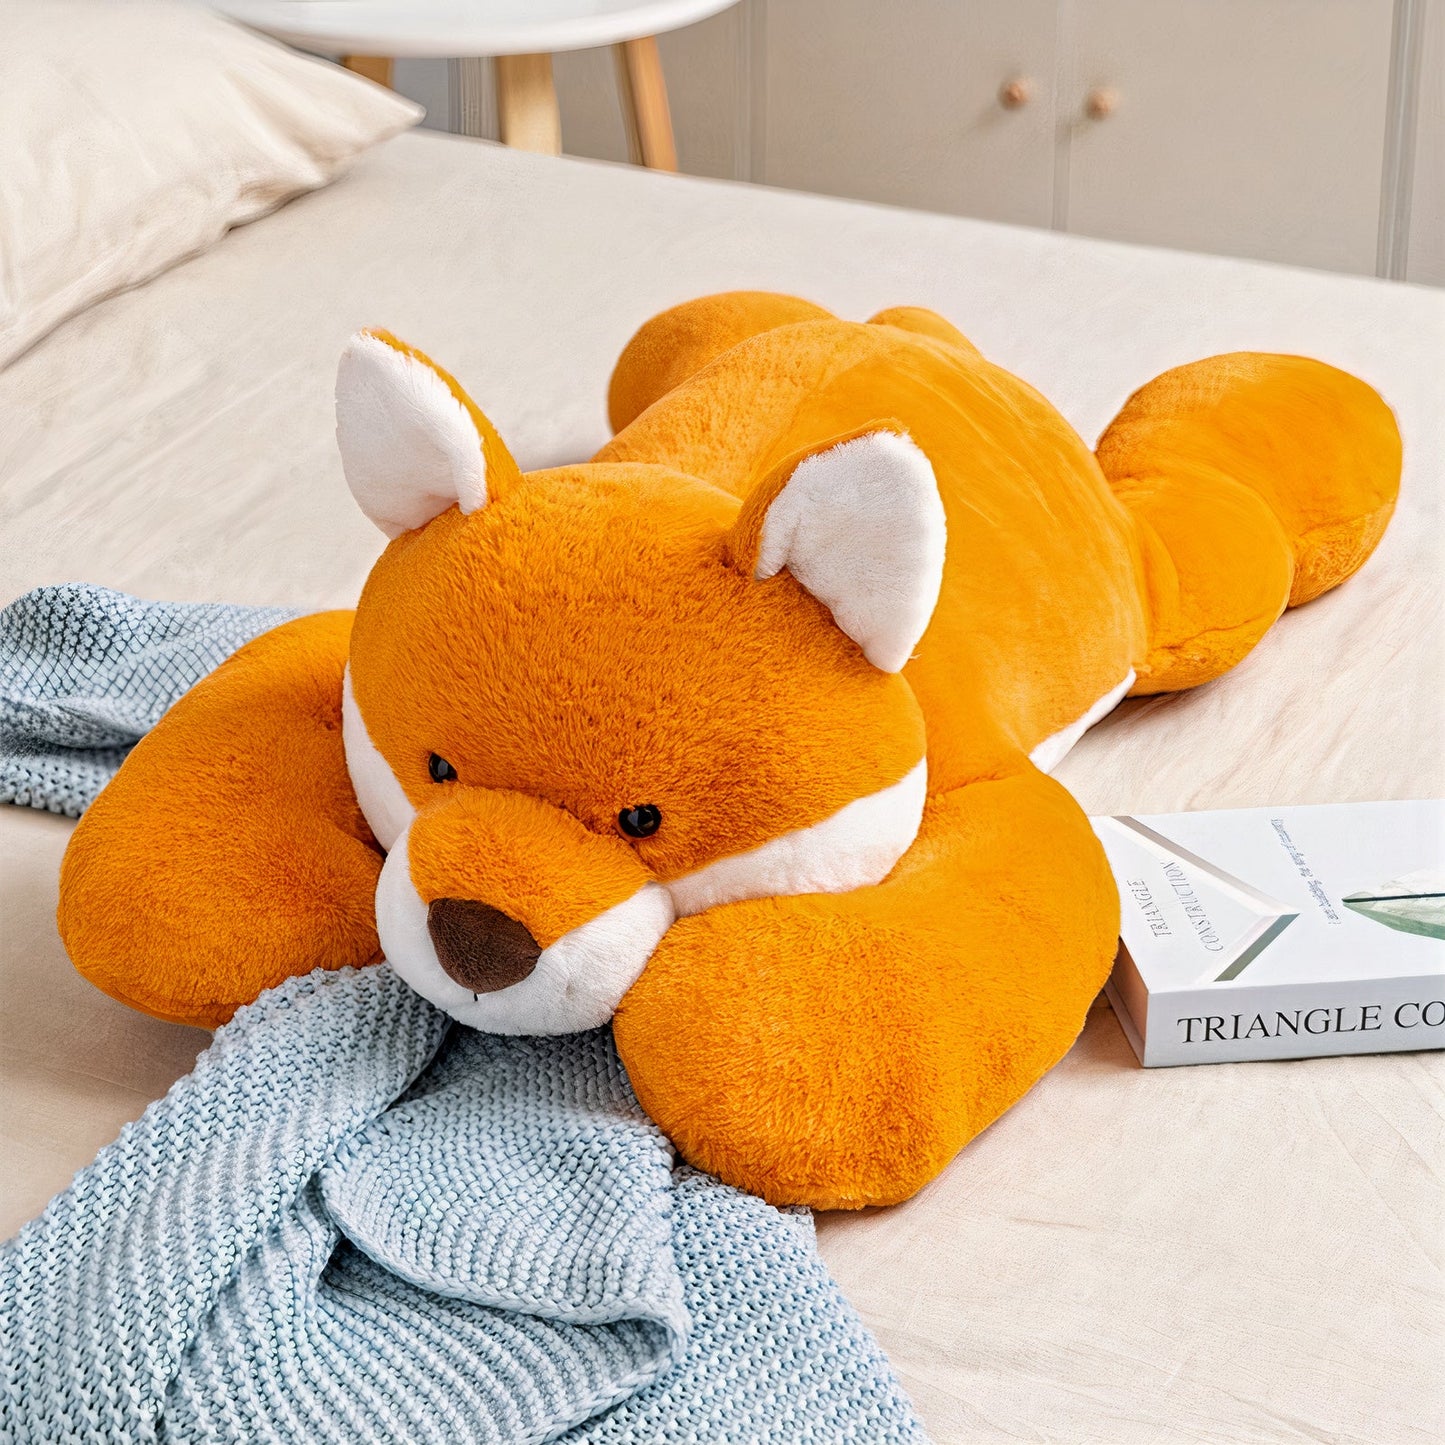 Plumpy Adorable Stuffed Animal Plushies